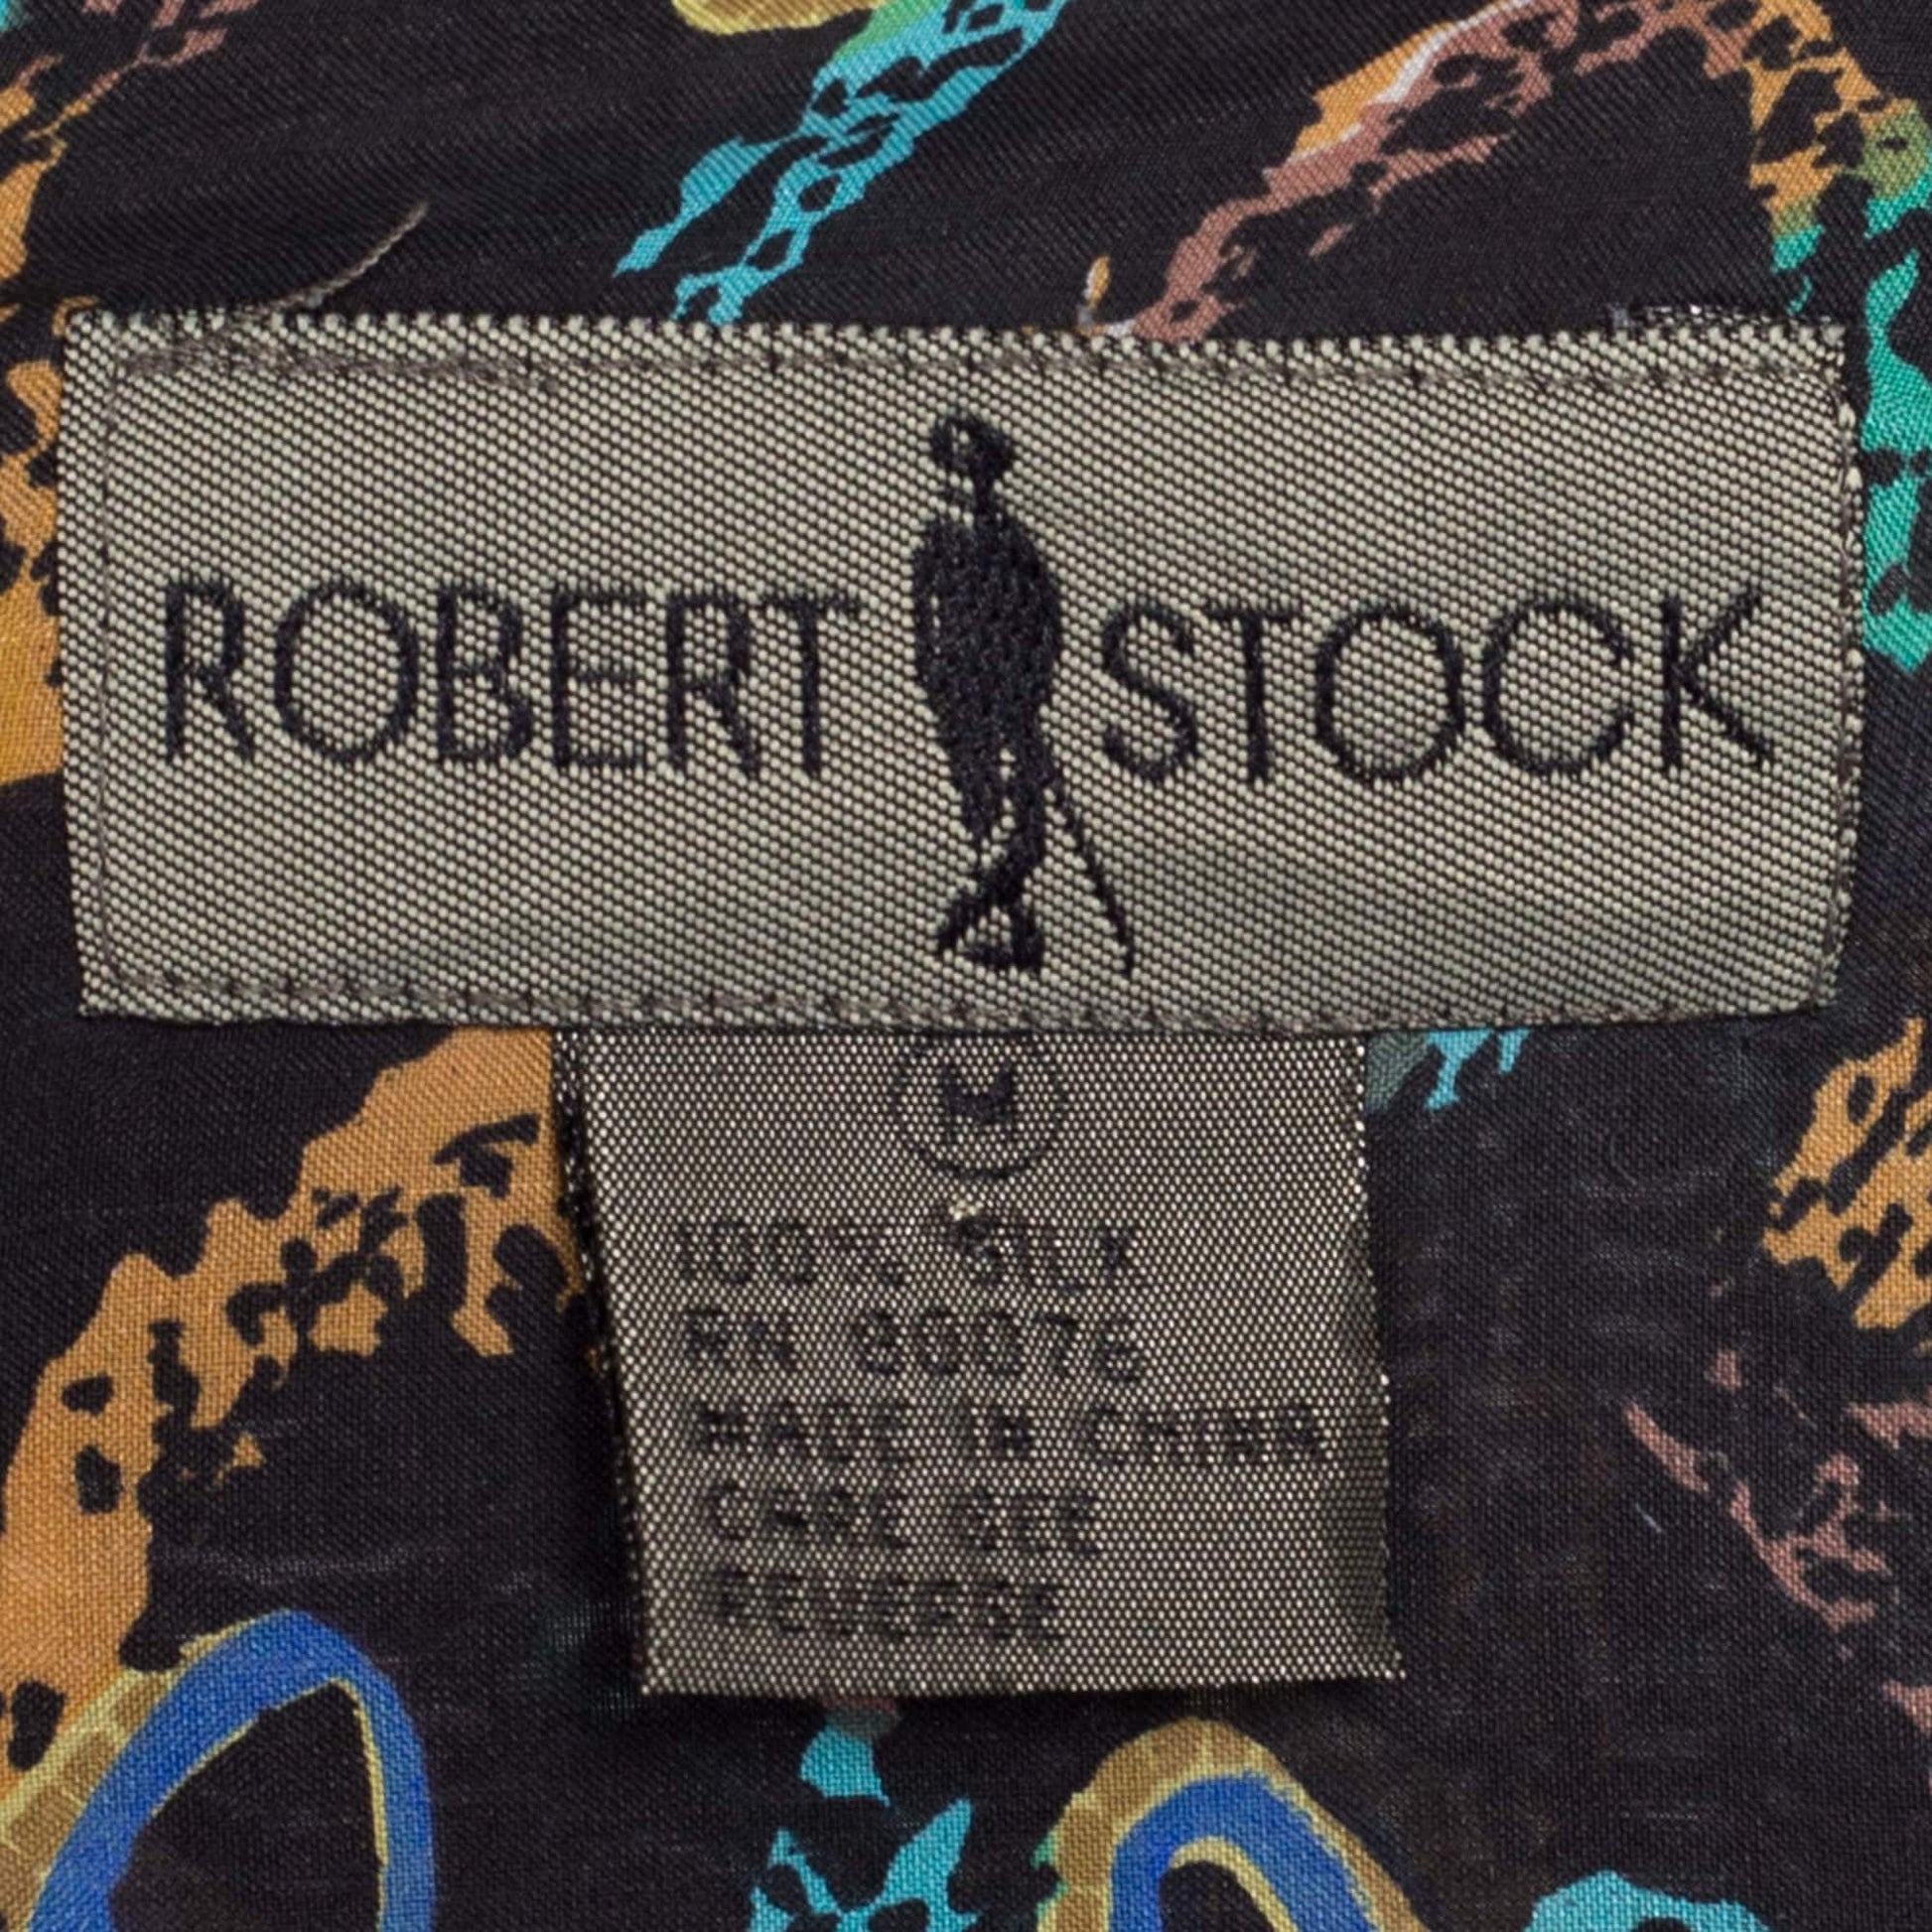 90s Silk Abstract Chain Print Shirt - Men's Medium | Vintage Robert Stock Long Sleeve Button Up Collared Top